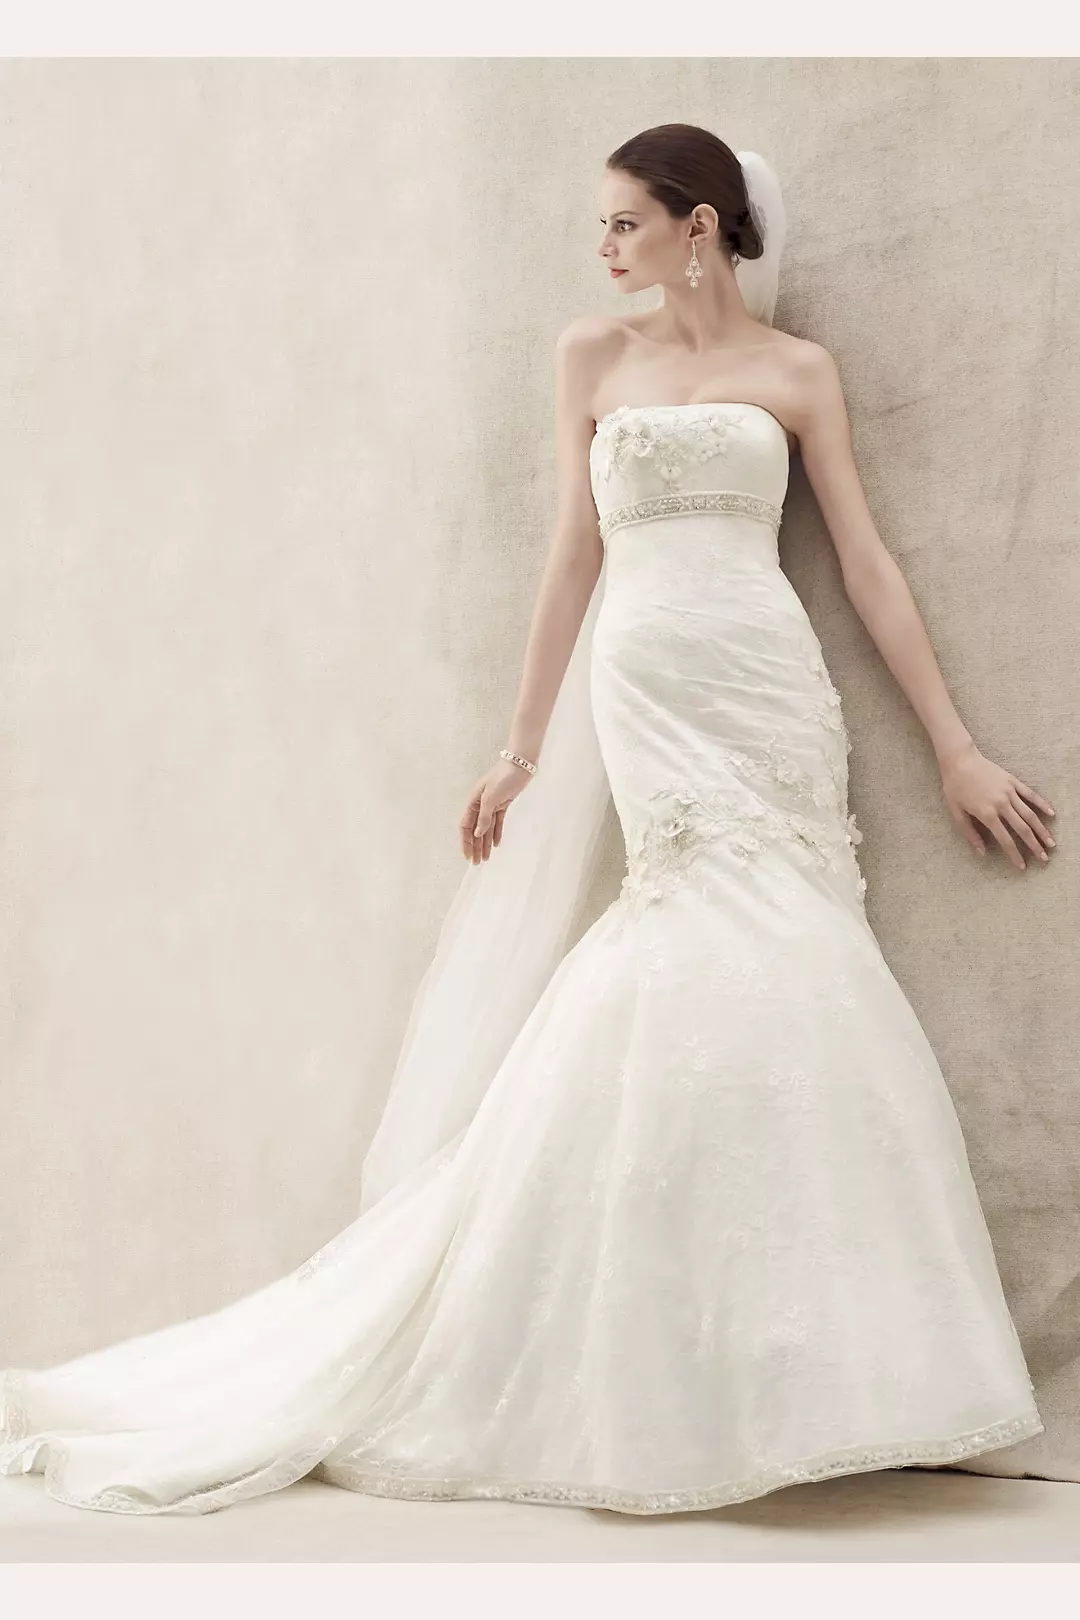 Petite Lace Wedding Dress with Floral Details Image 3